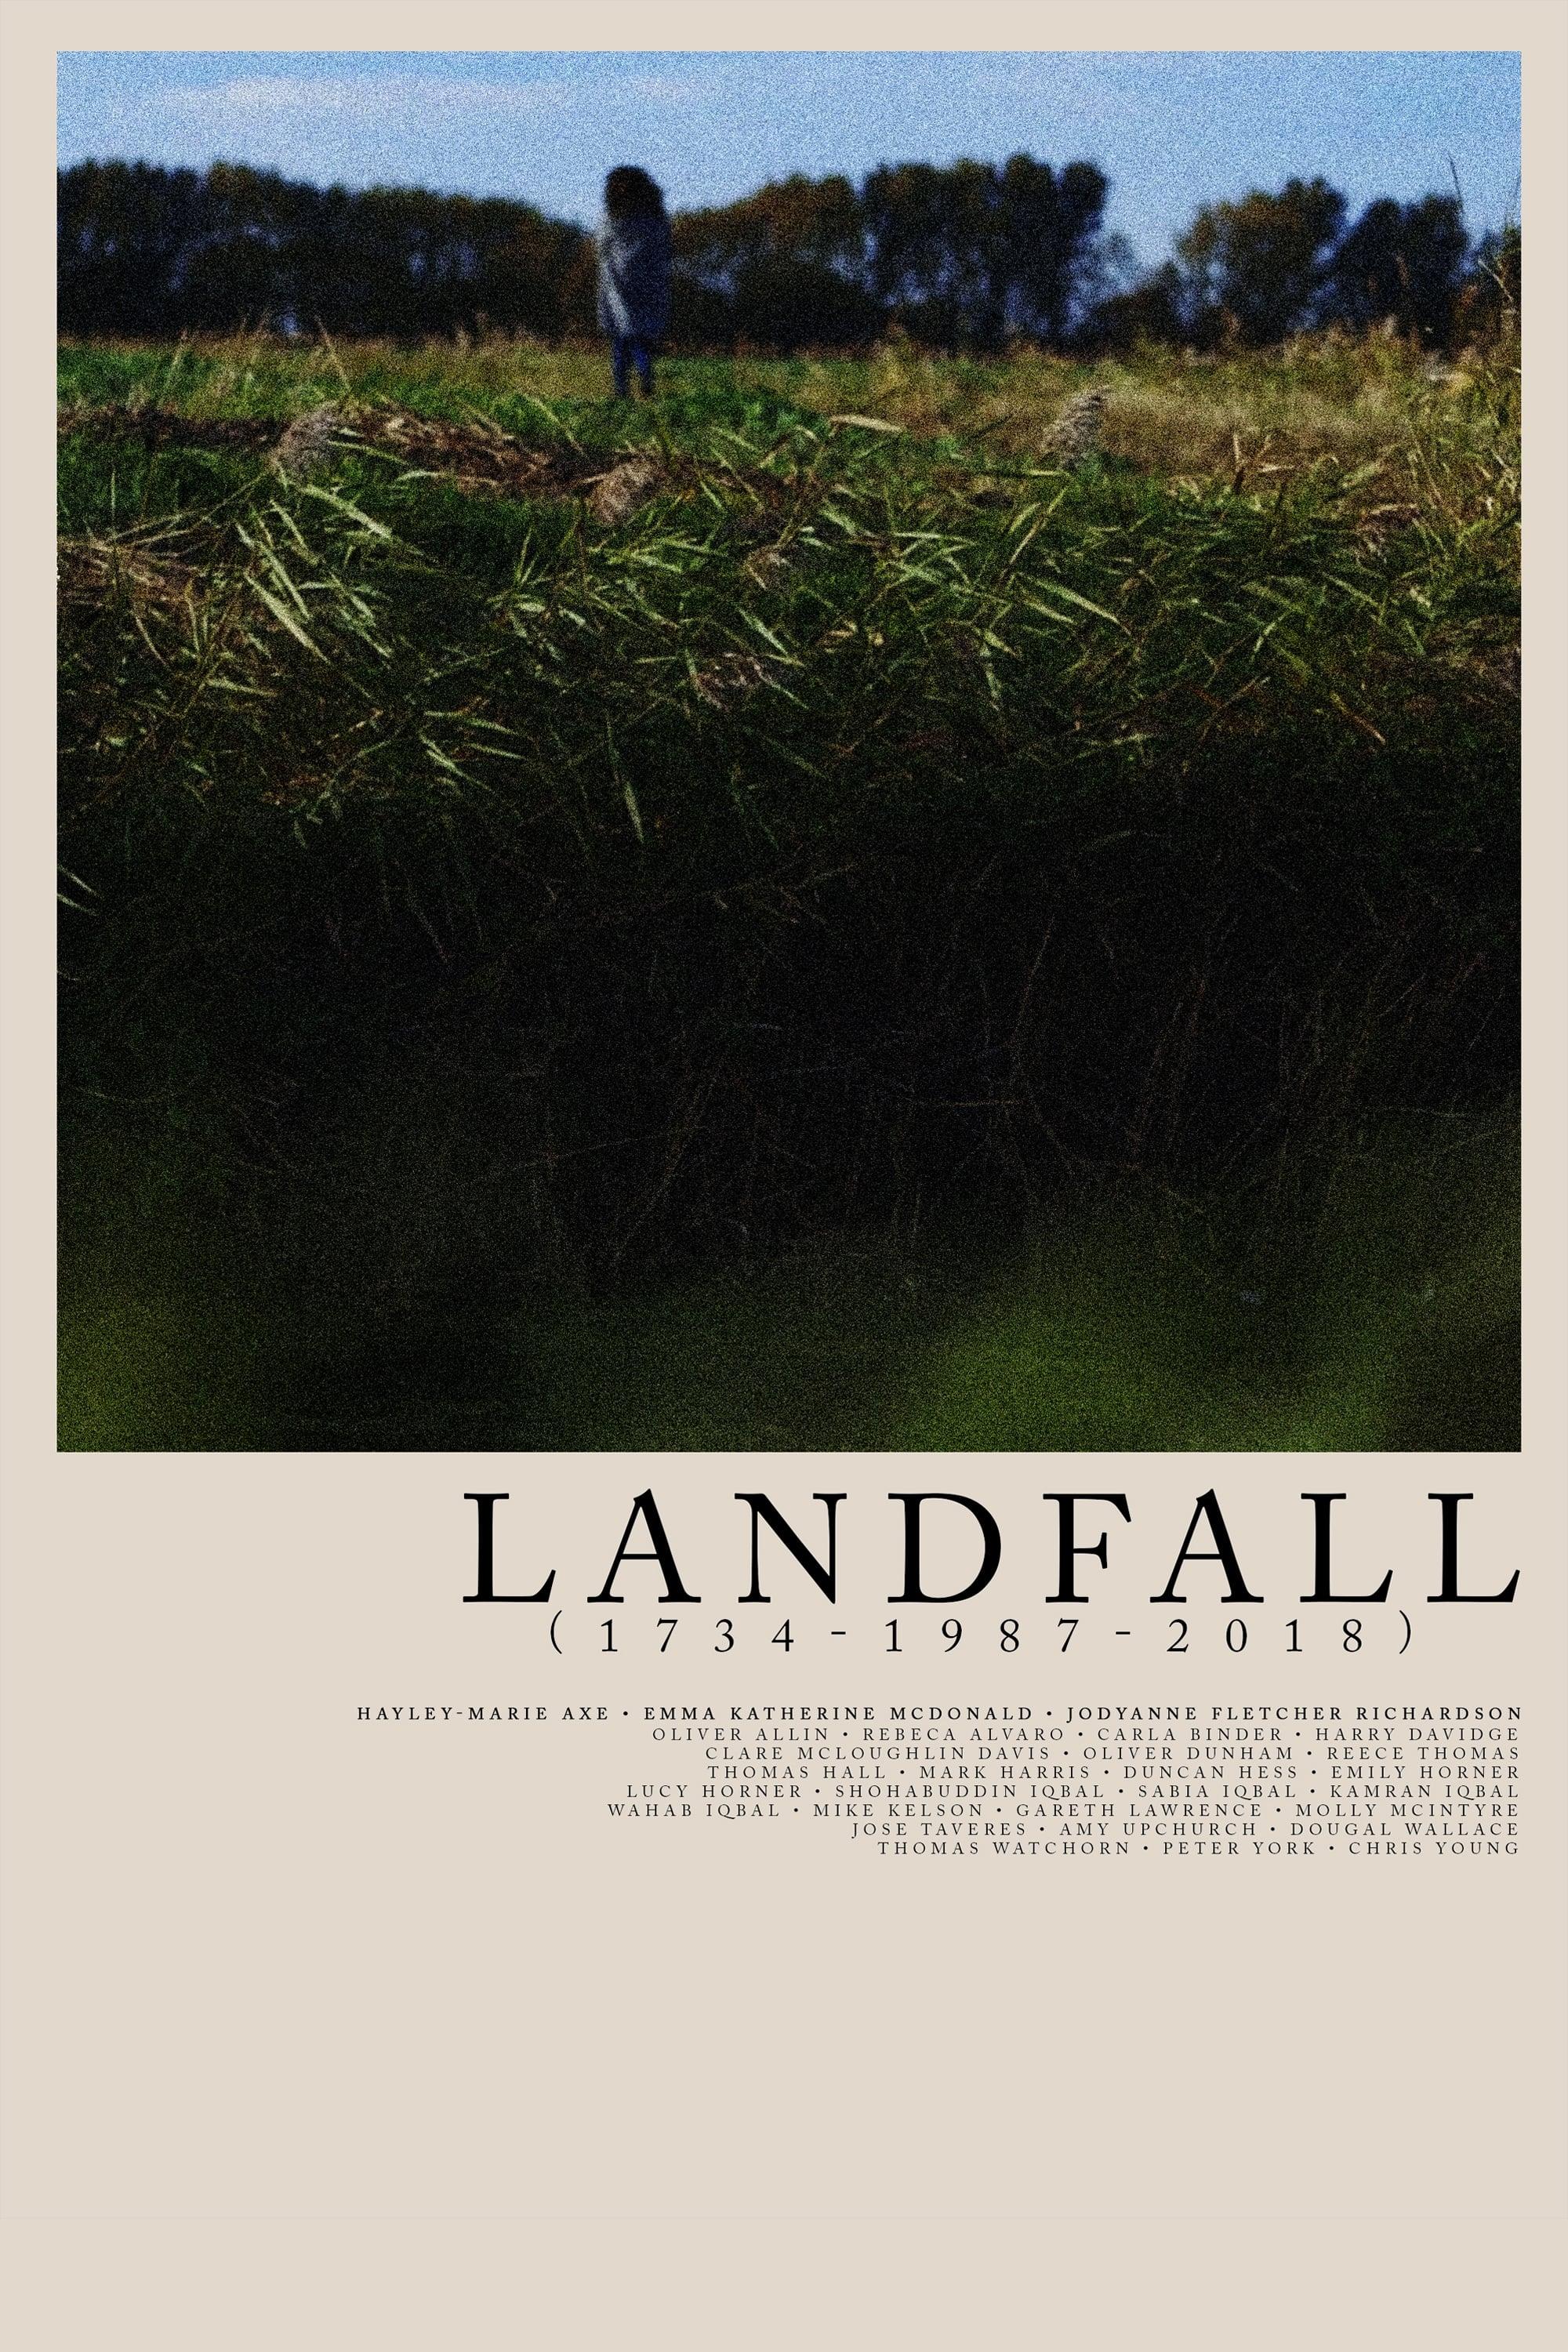 Landfall (1734—1987—2018) poster